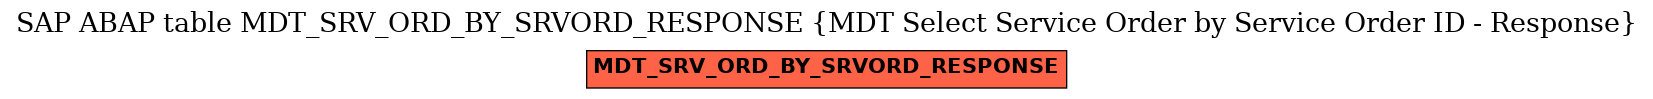 E-R Diagram for table MDT_SRV_ORD_BY_SRVORD_RESPONSE (MDT Select Service Order by Service Order ID - Response)